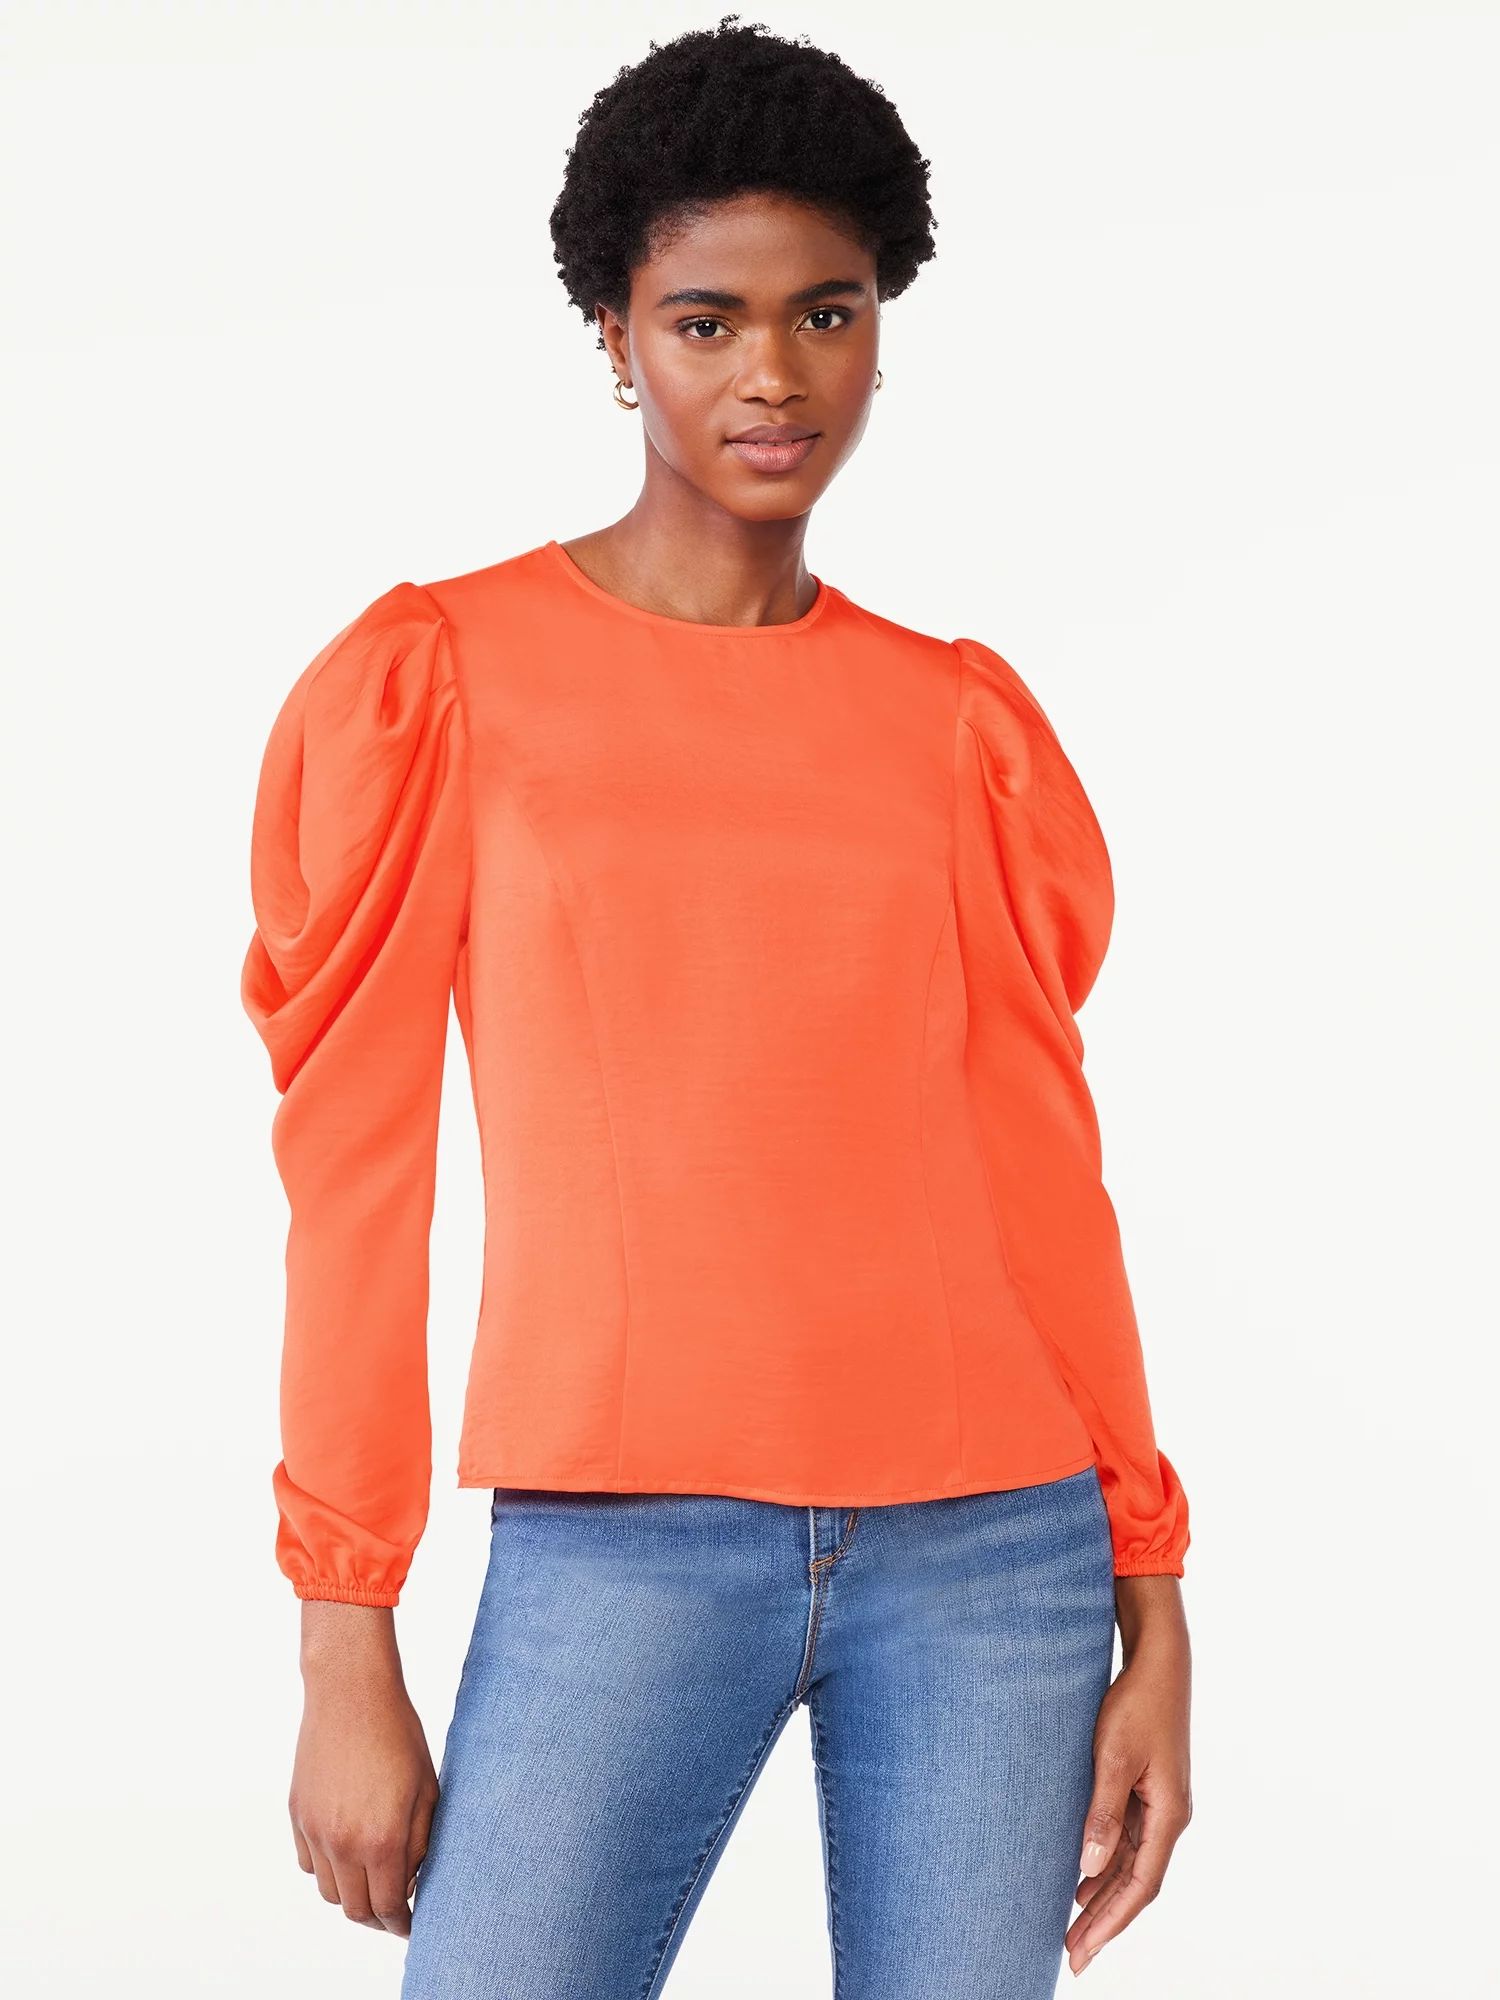 Scoop Women's Top with Blouson Sleeves, Sizes XS-XXL | Walmart (US)